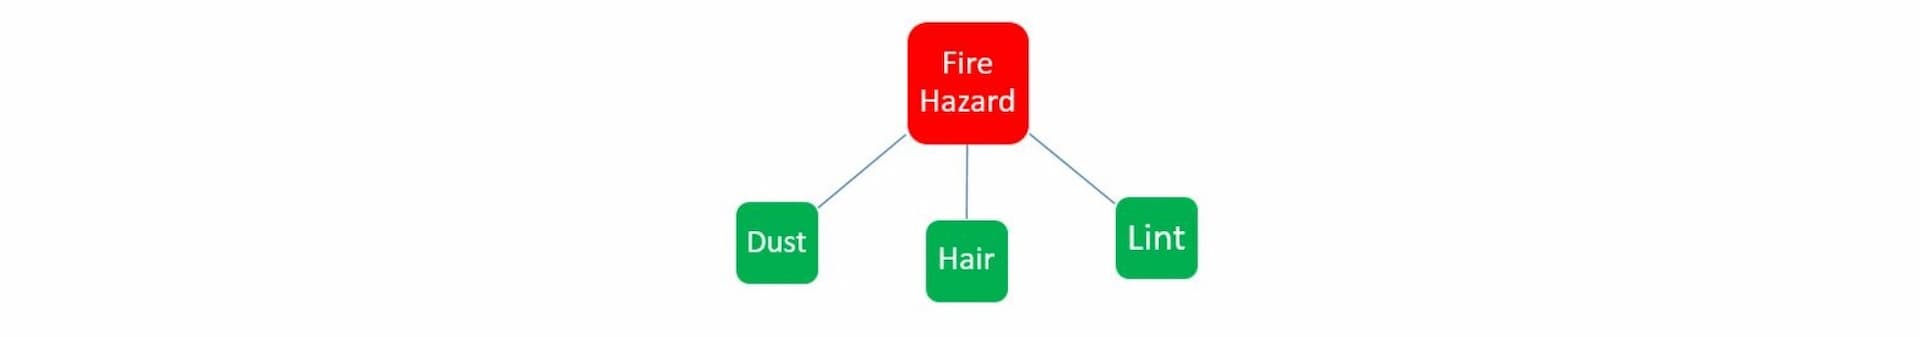 Fire hazardous material